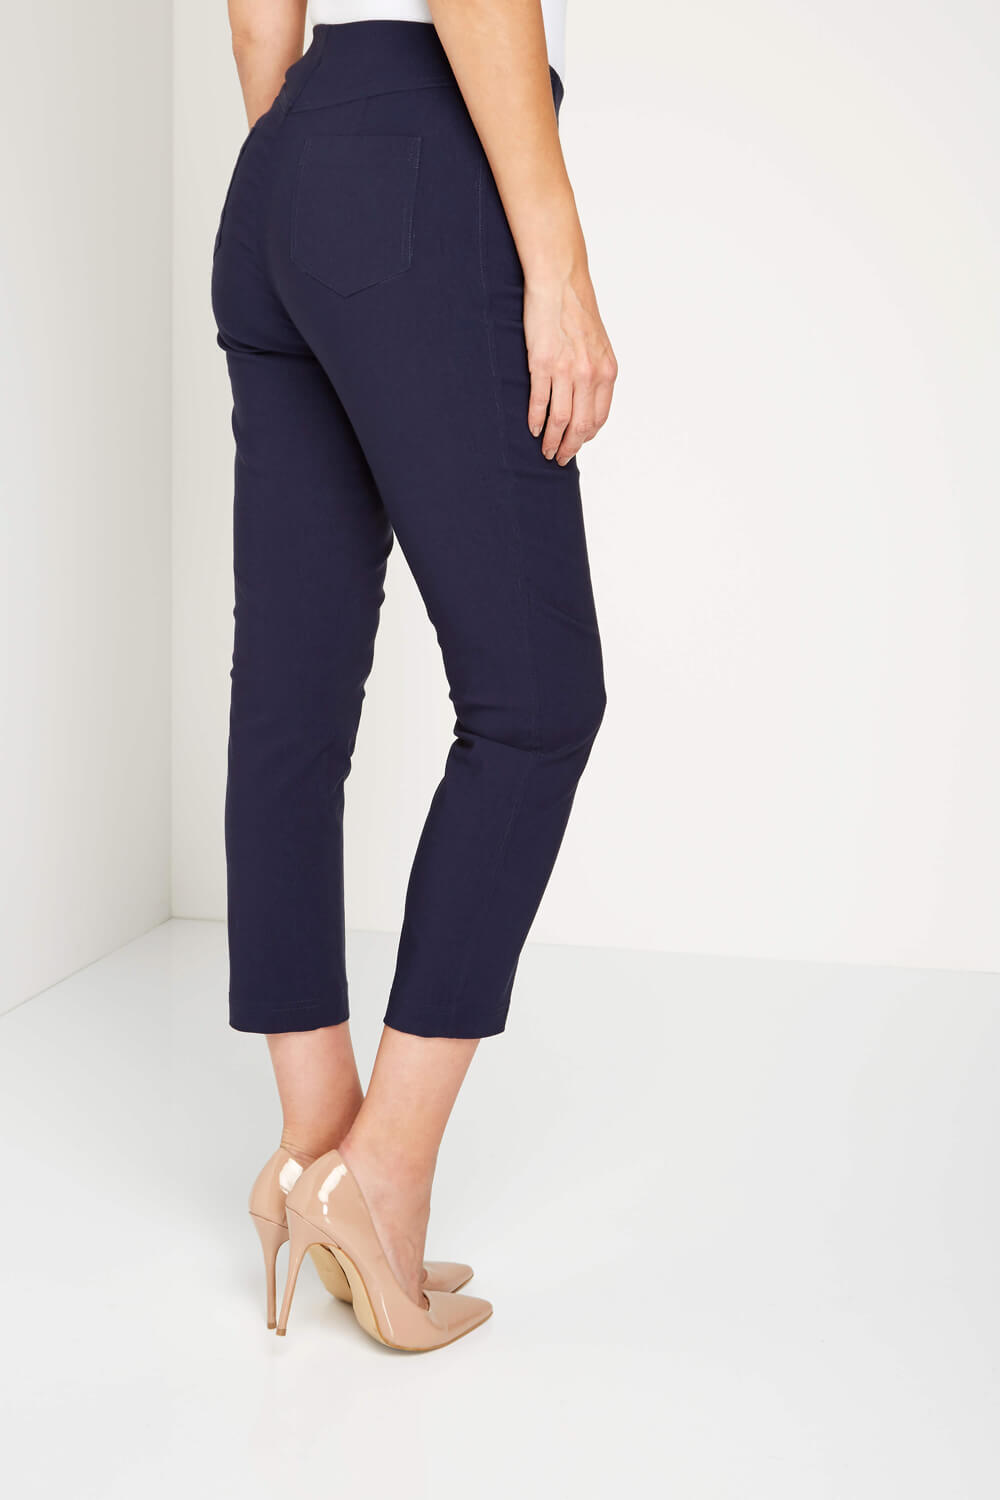 Summer Women Pencil Pants Casual Solid Button Design Pocket 3/4 Length  Trousers For Women High Waist Pants - AliExpress